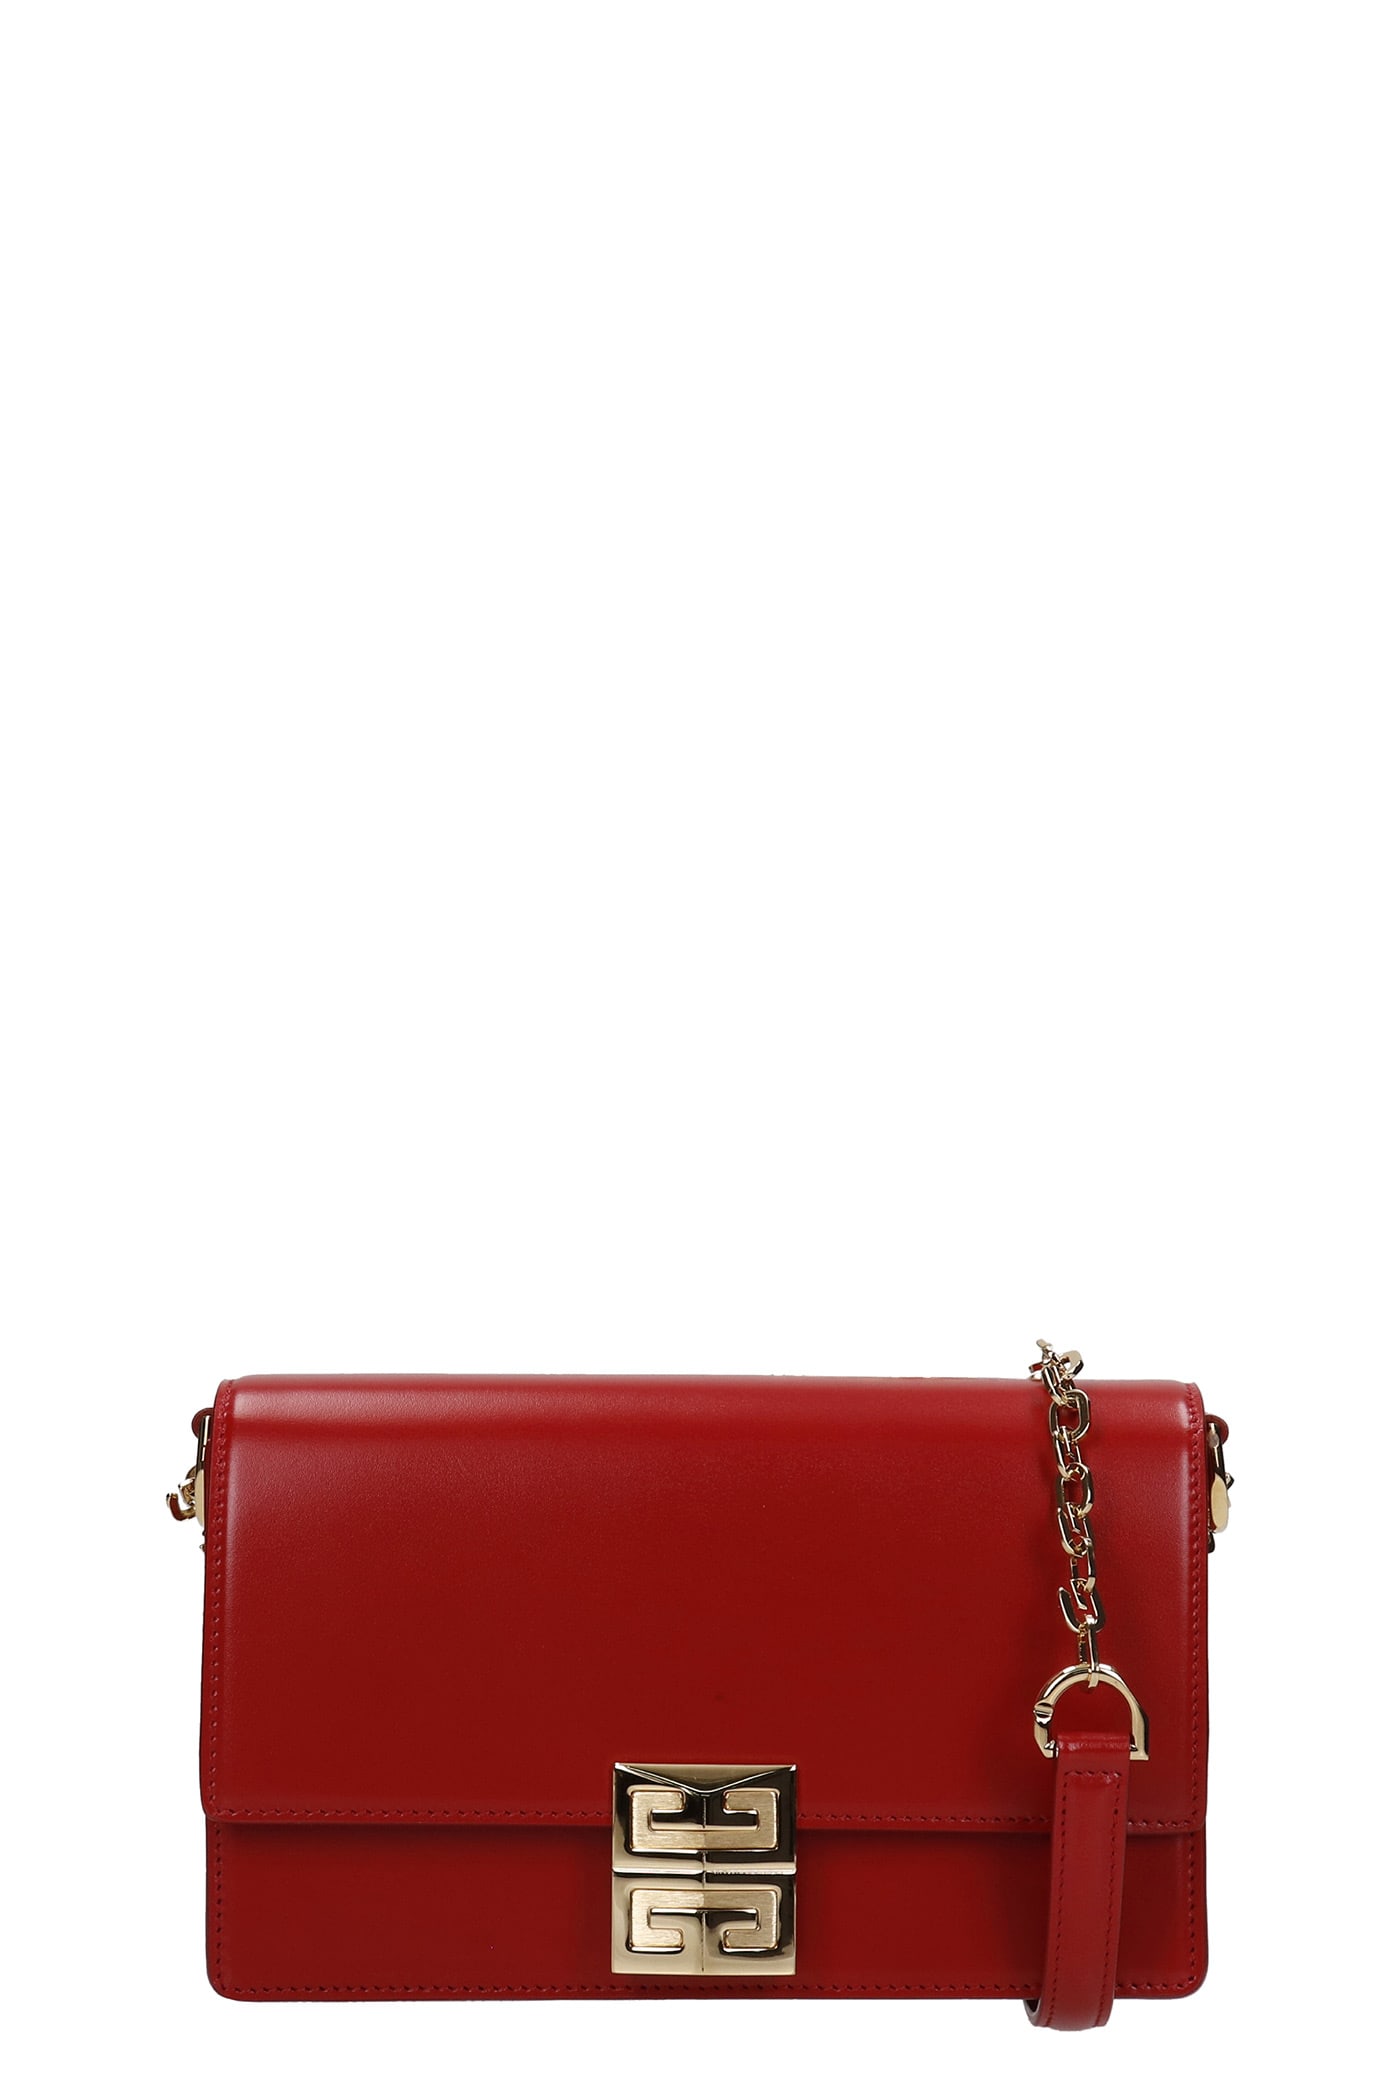 Givenchy 4g Shoulder Bag In Red Leather